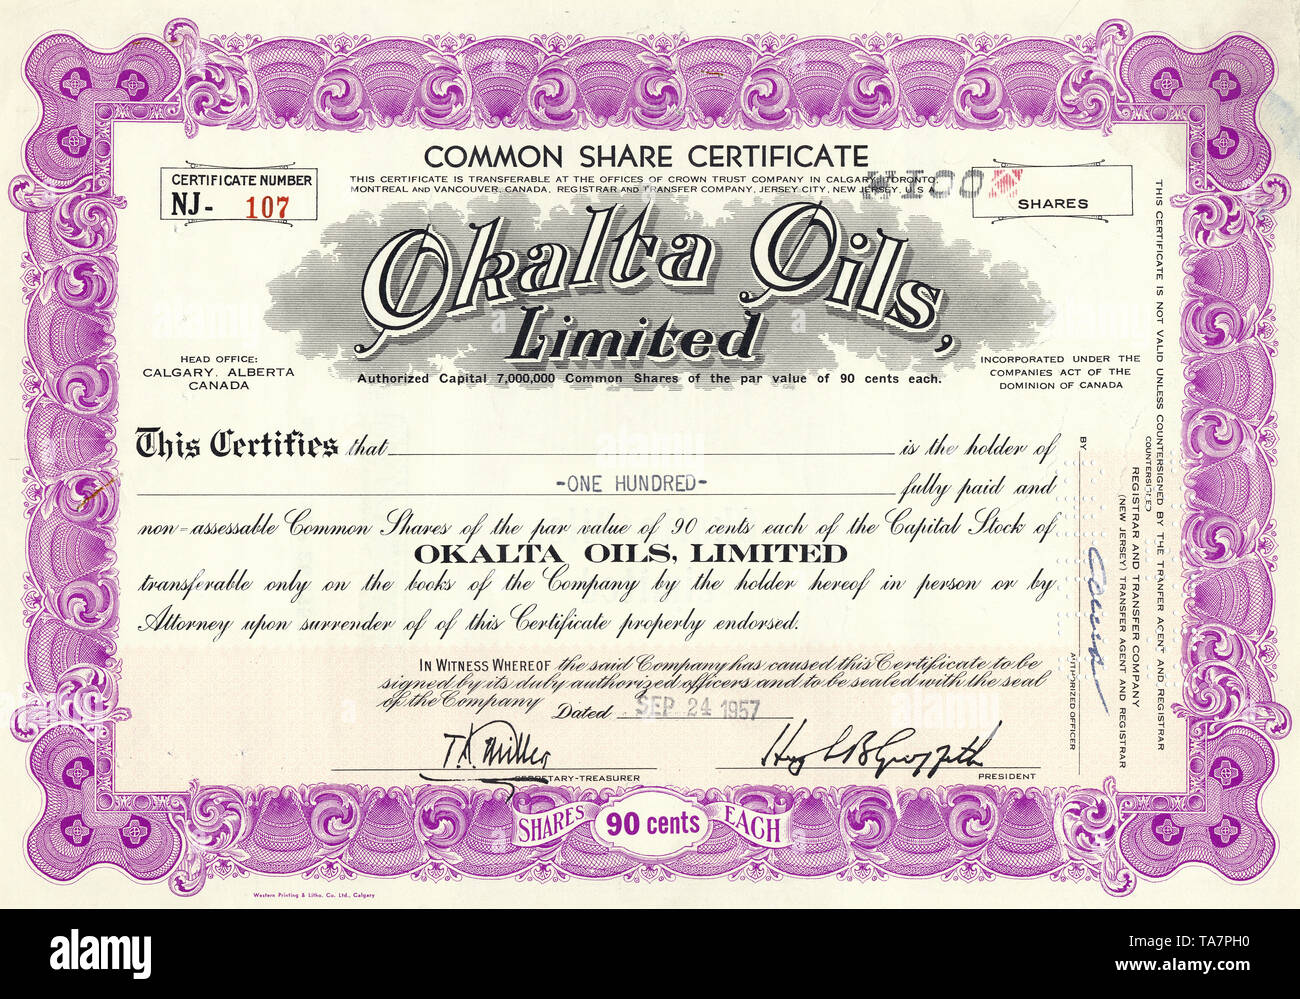 Historical stock certificate of an oil and gas company, Okalta Oils Limited, Calgary, Alberta, Canada, 1957, Wertpapier, historische Aktie, Mineralöl- und Erdgasunternehmen, Okalta Oils Limited , 1957, Calgary, Alberta, Kanada Stock Photo